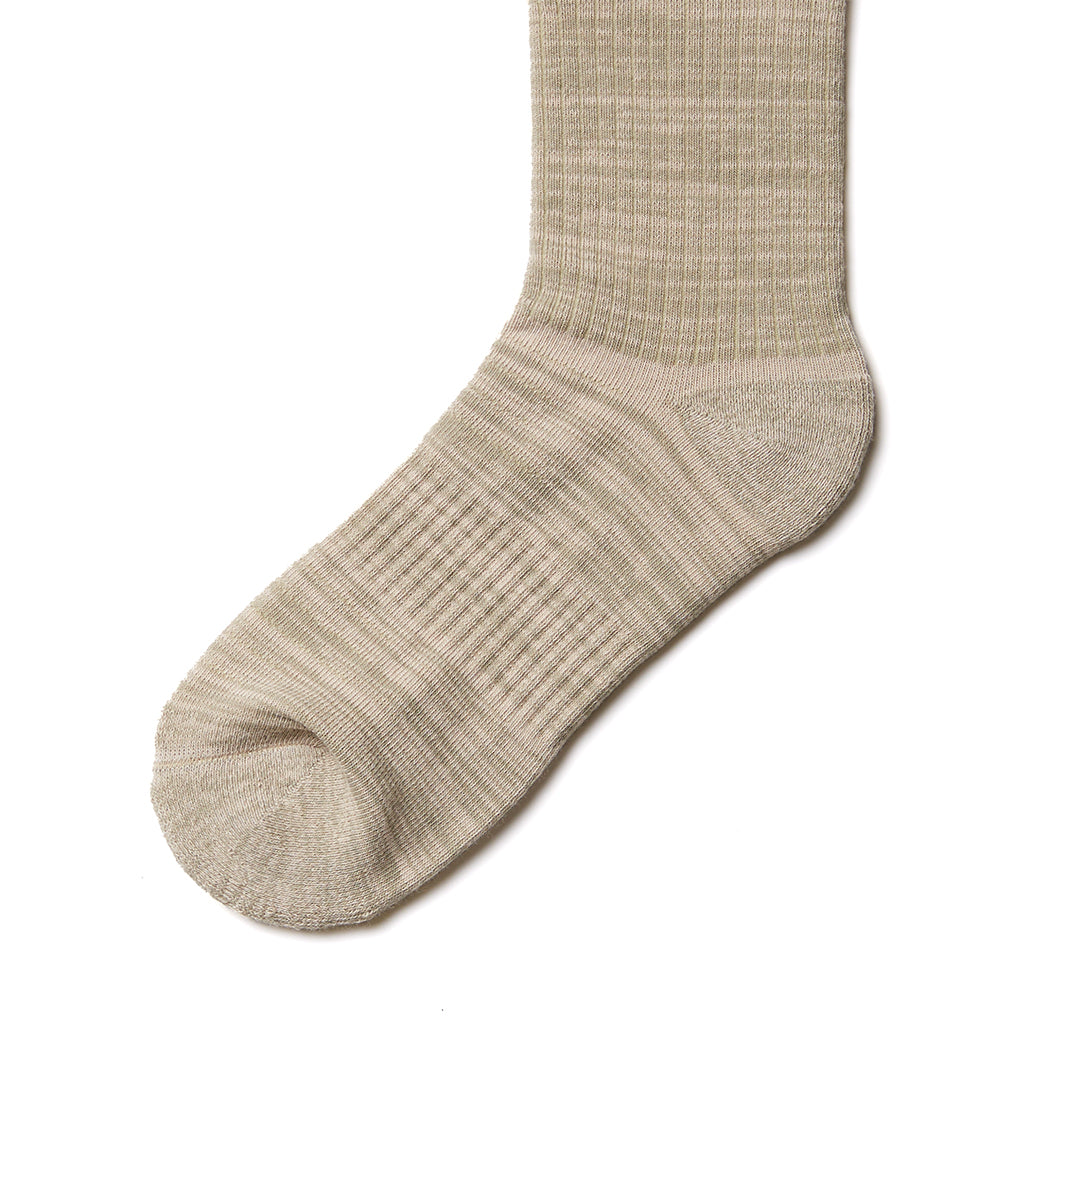 Essential casual socks - Sand Pink